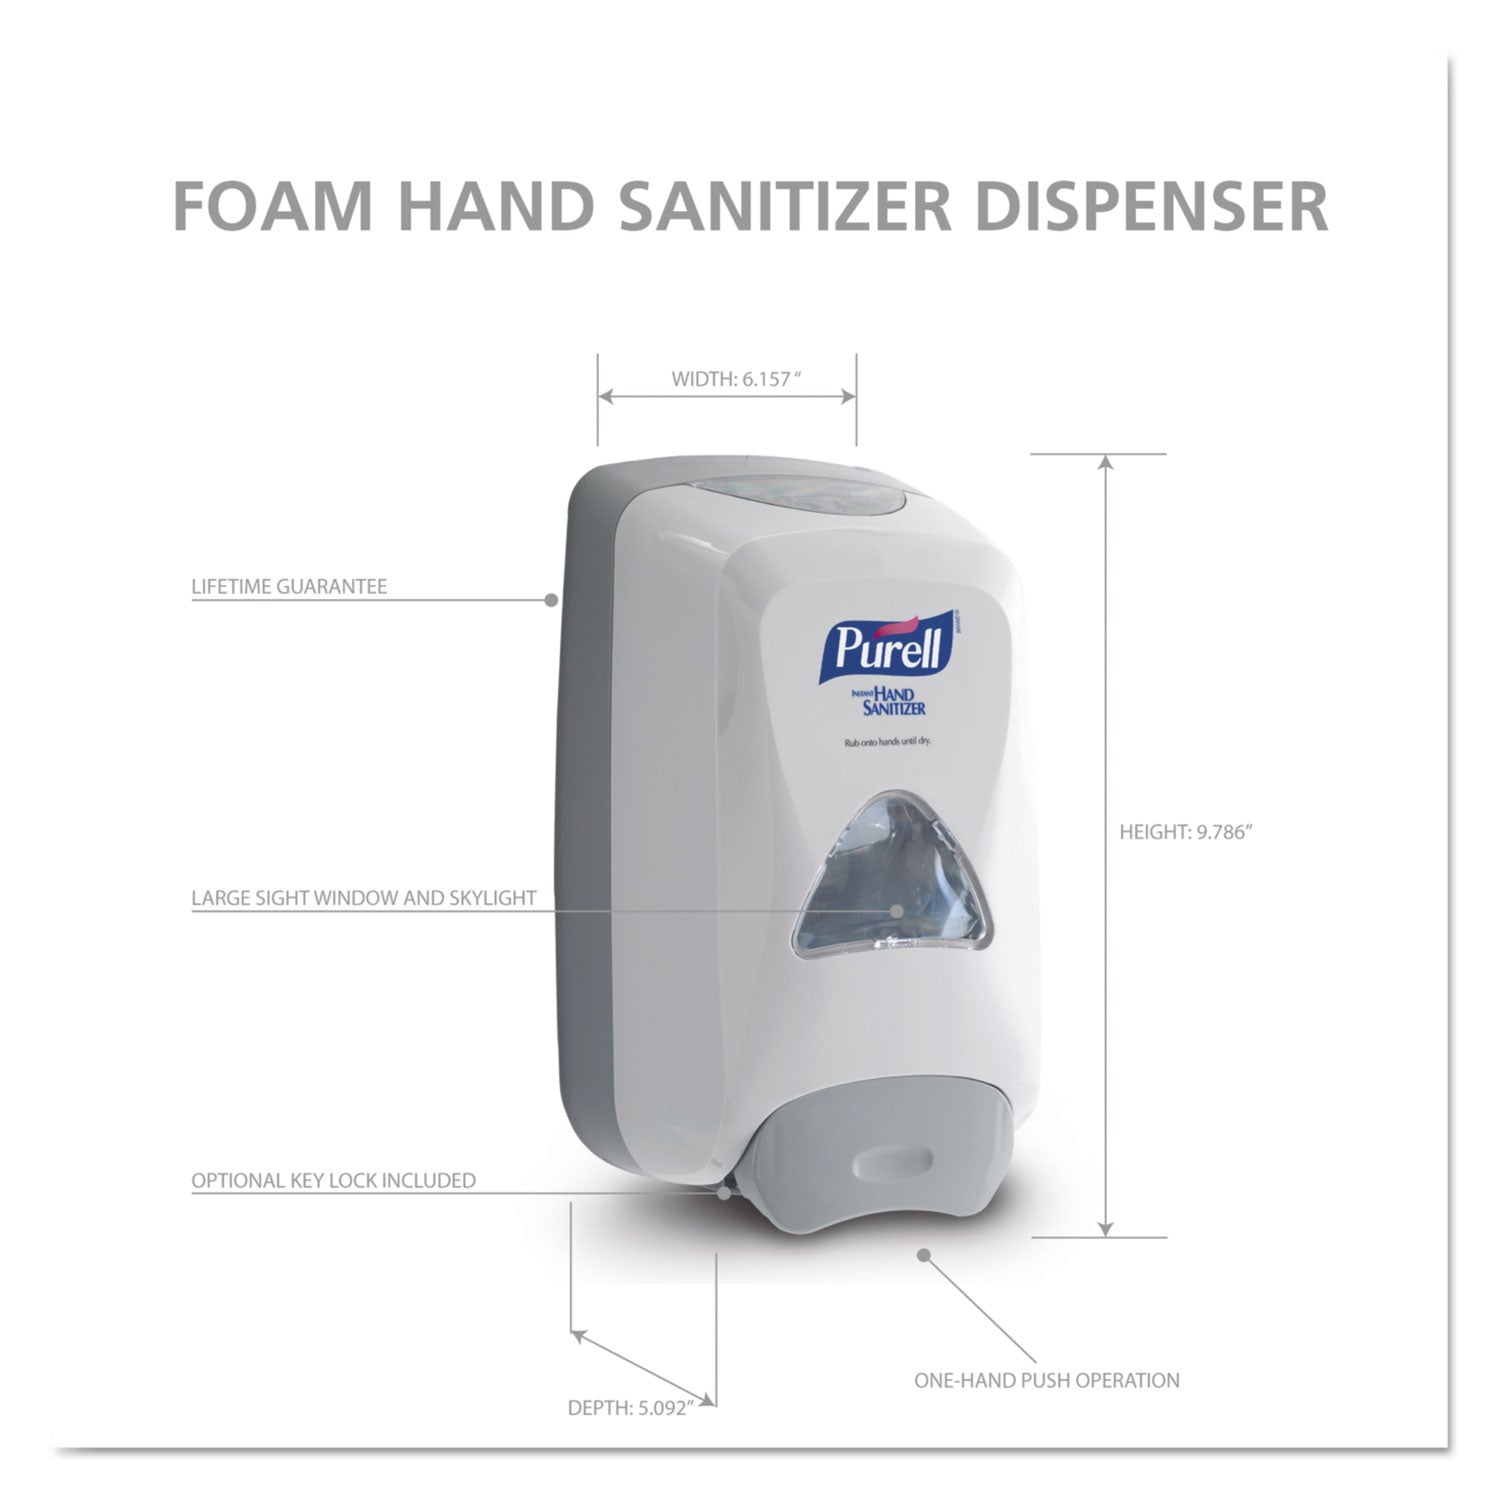 FMX-12 Foam Hand Sanitizer Dispenser, 1,200 mL Refill, 6.6 x 5.13 x 11, White - 